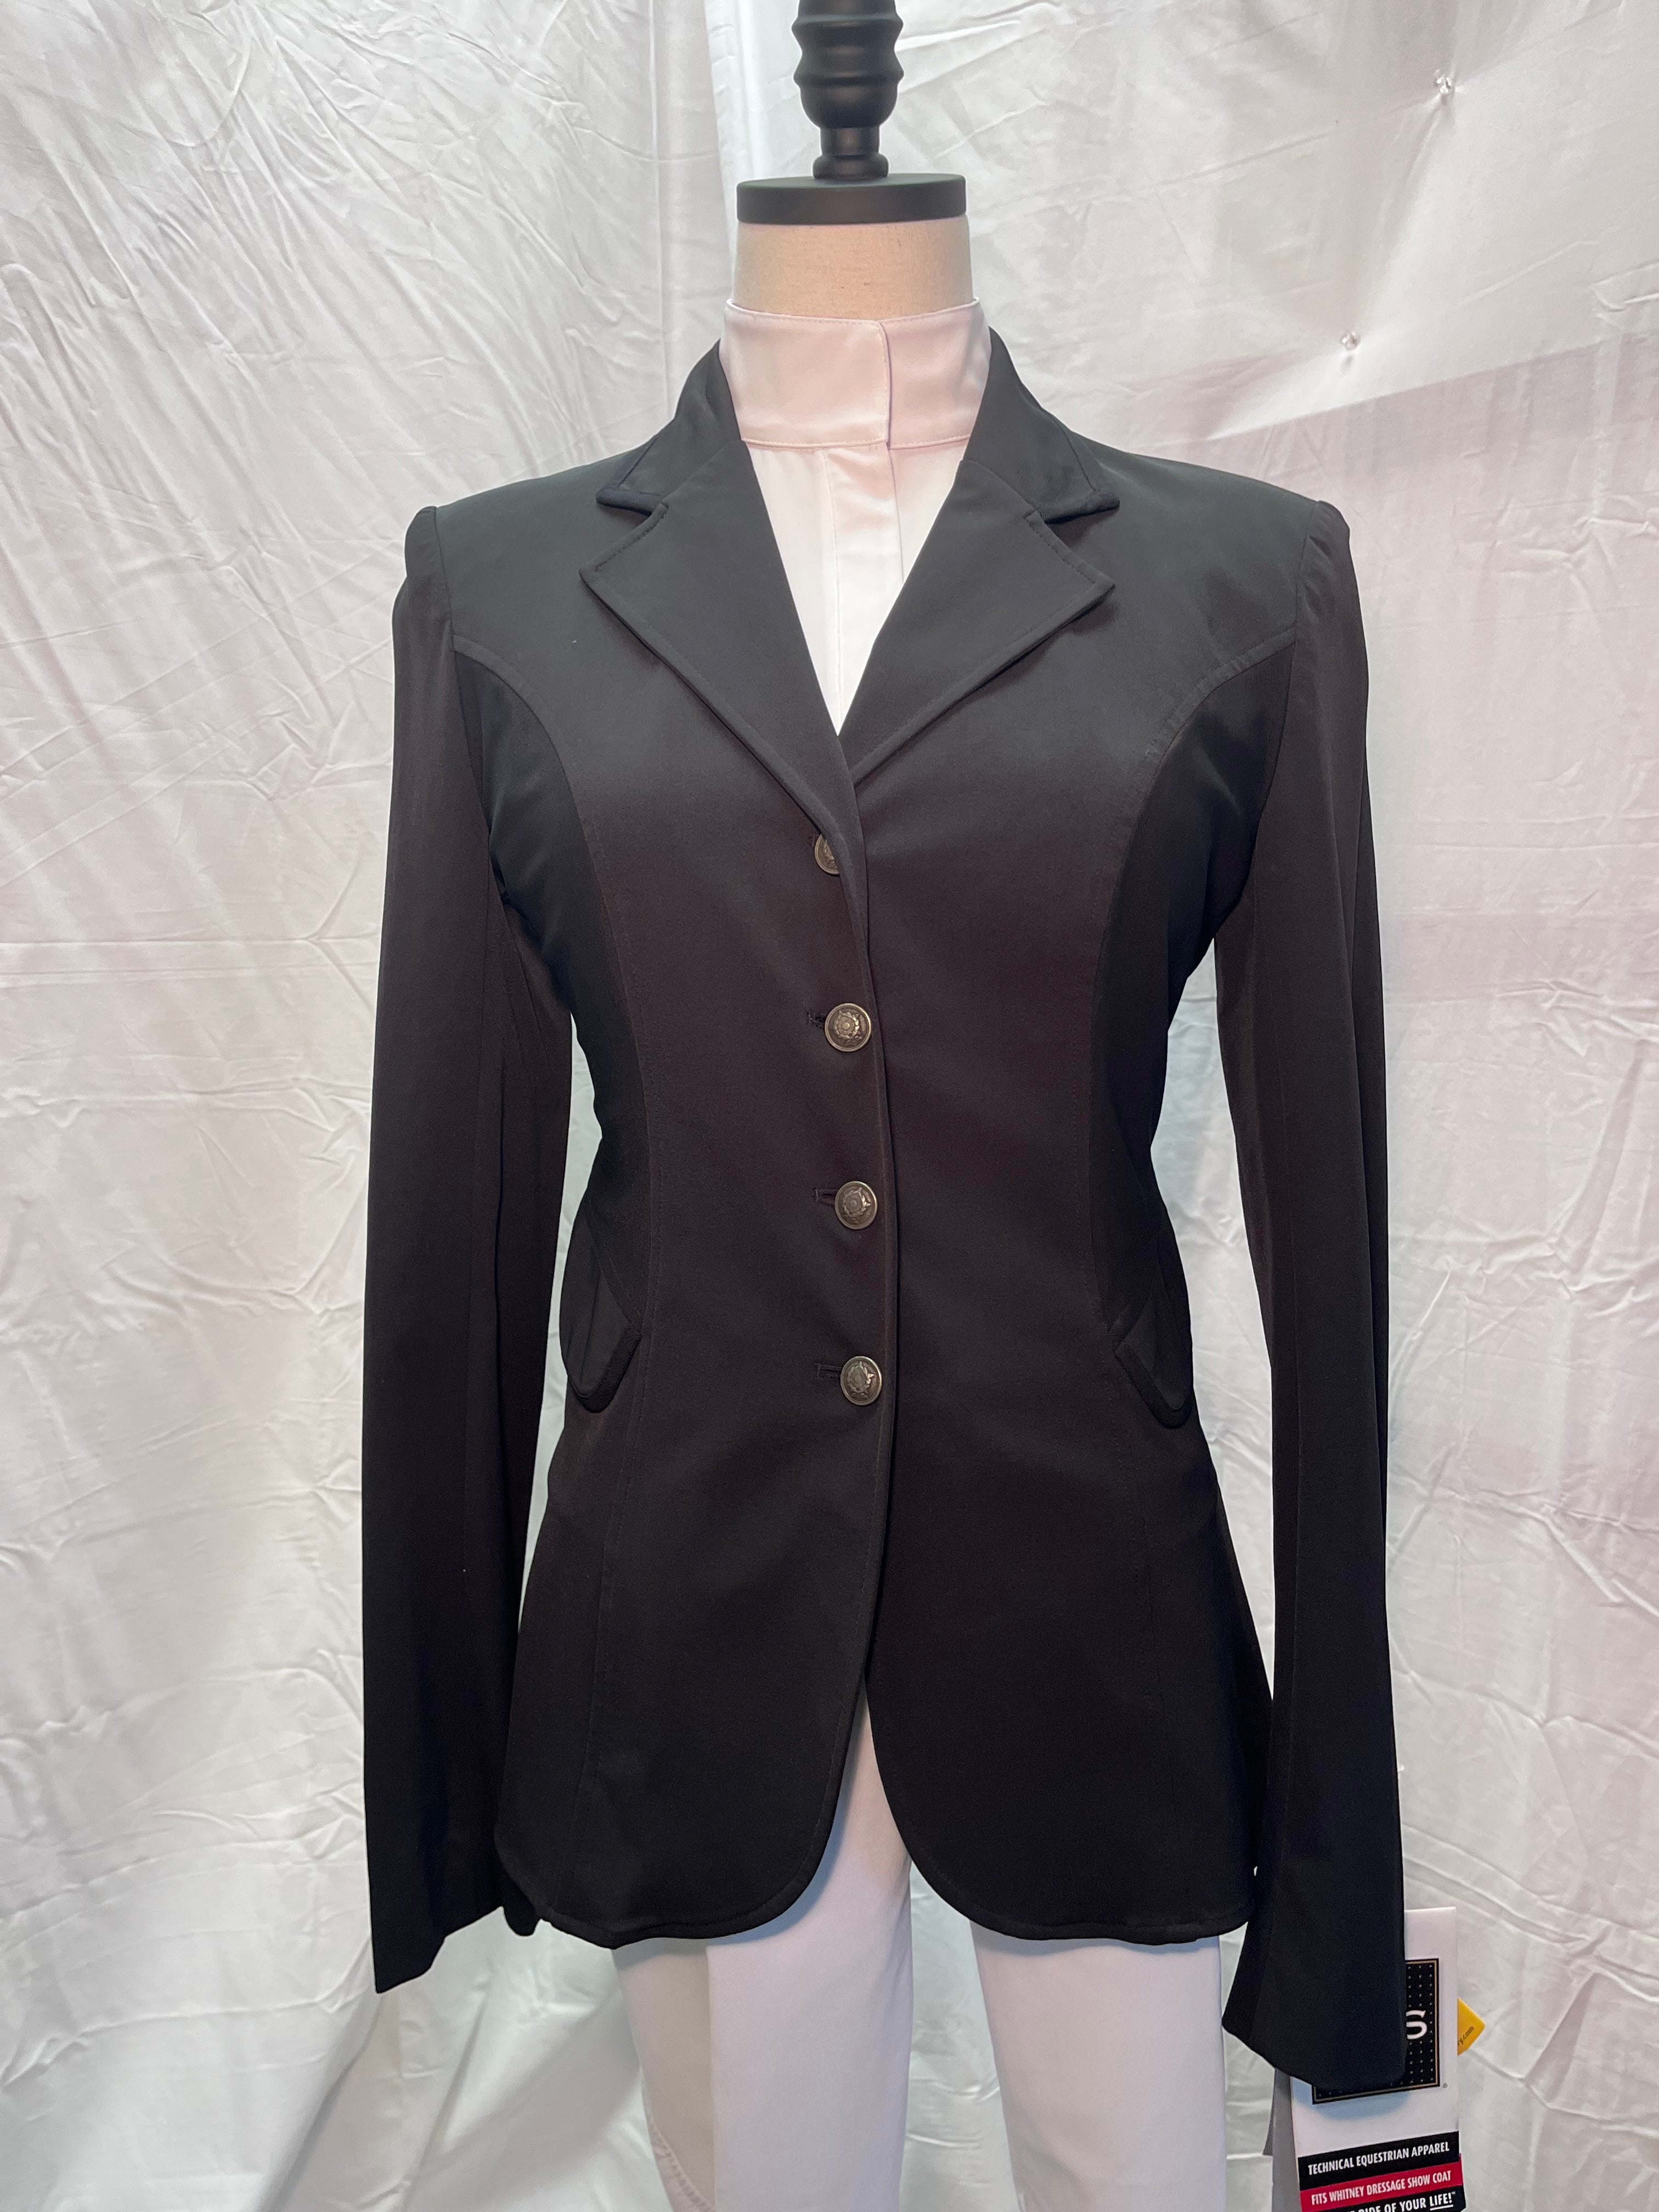 FITS Whitney Dressage Coat Small Black